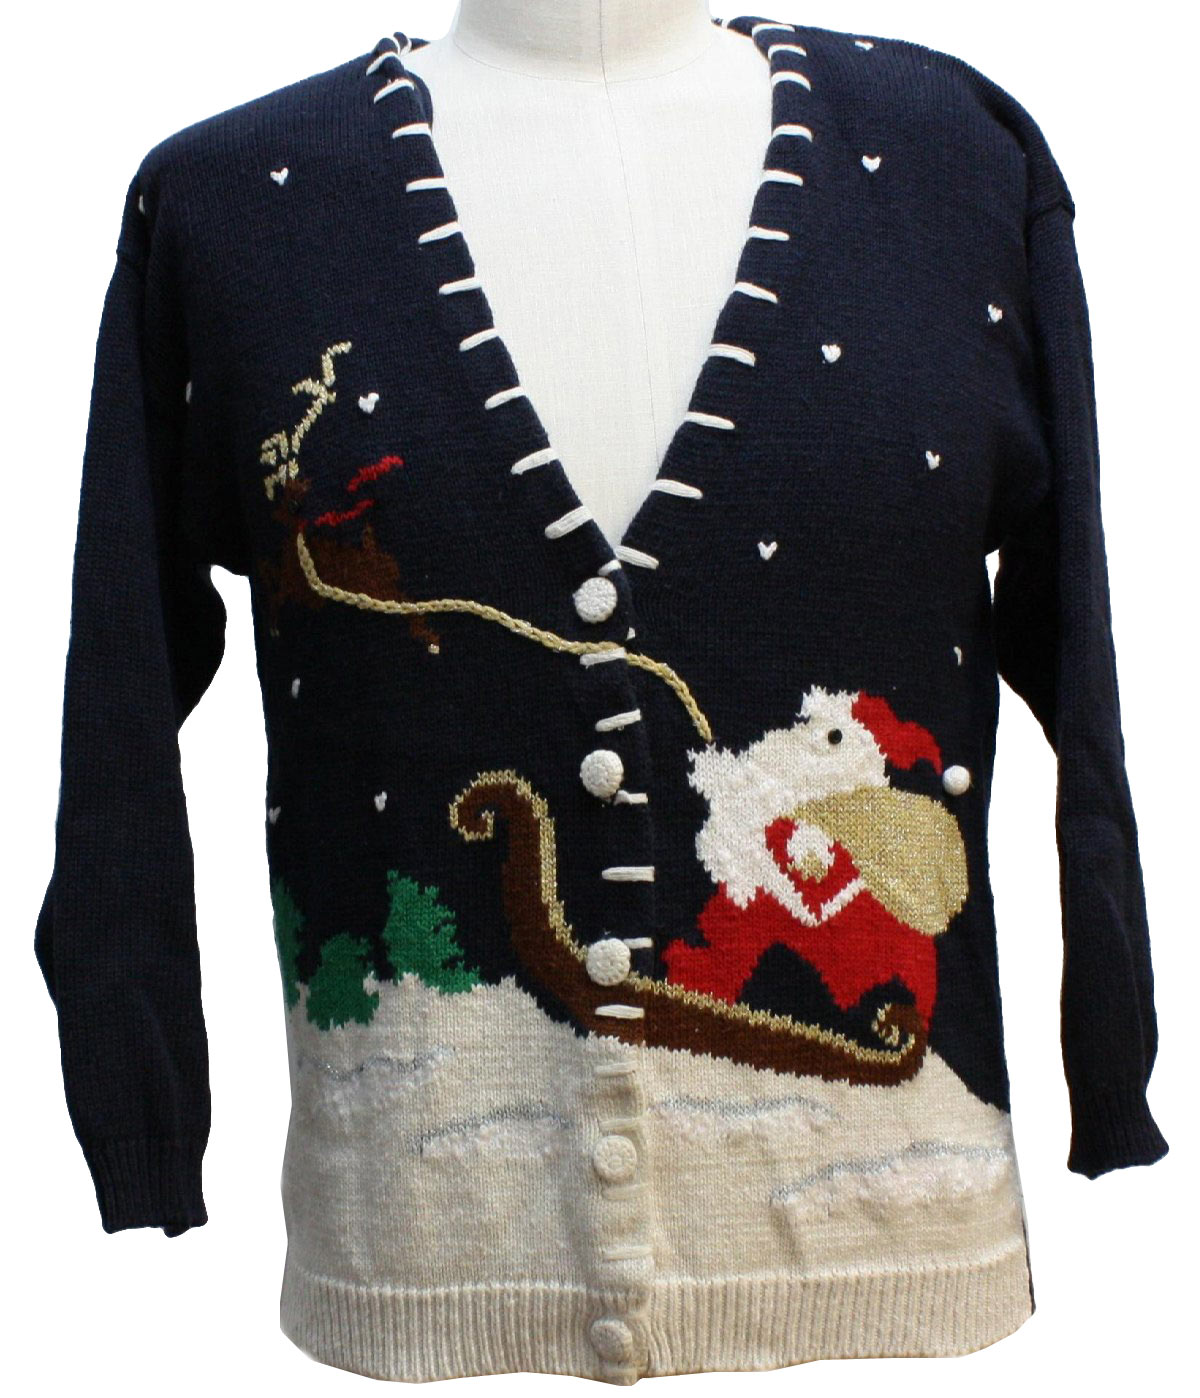 Ugly Christmas Sweater: -Norton McNaughton- Unisex navy and white ...